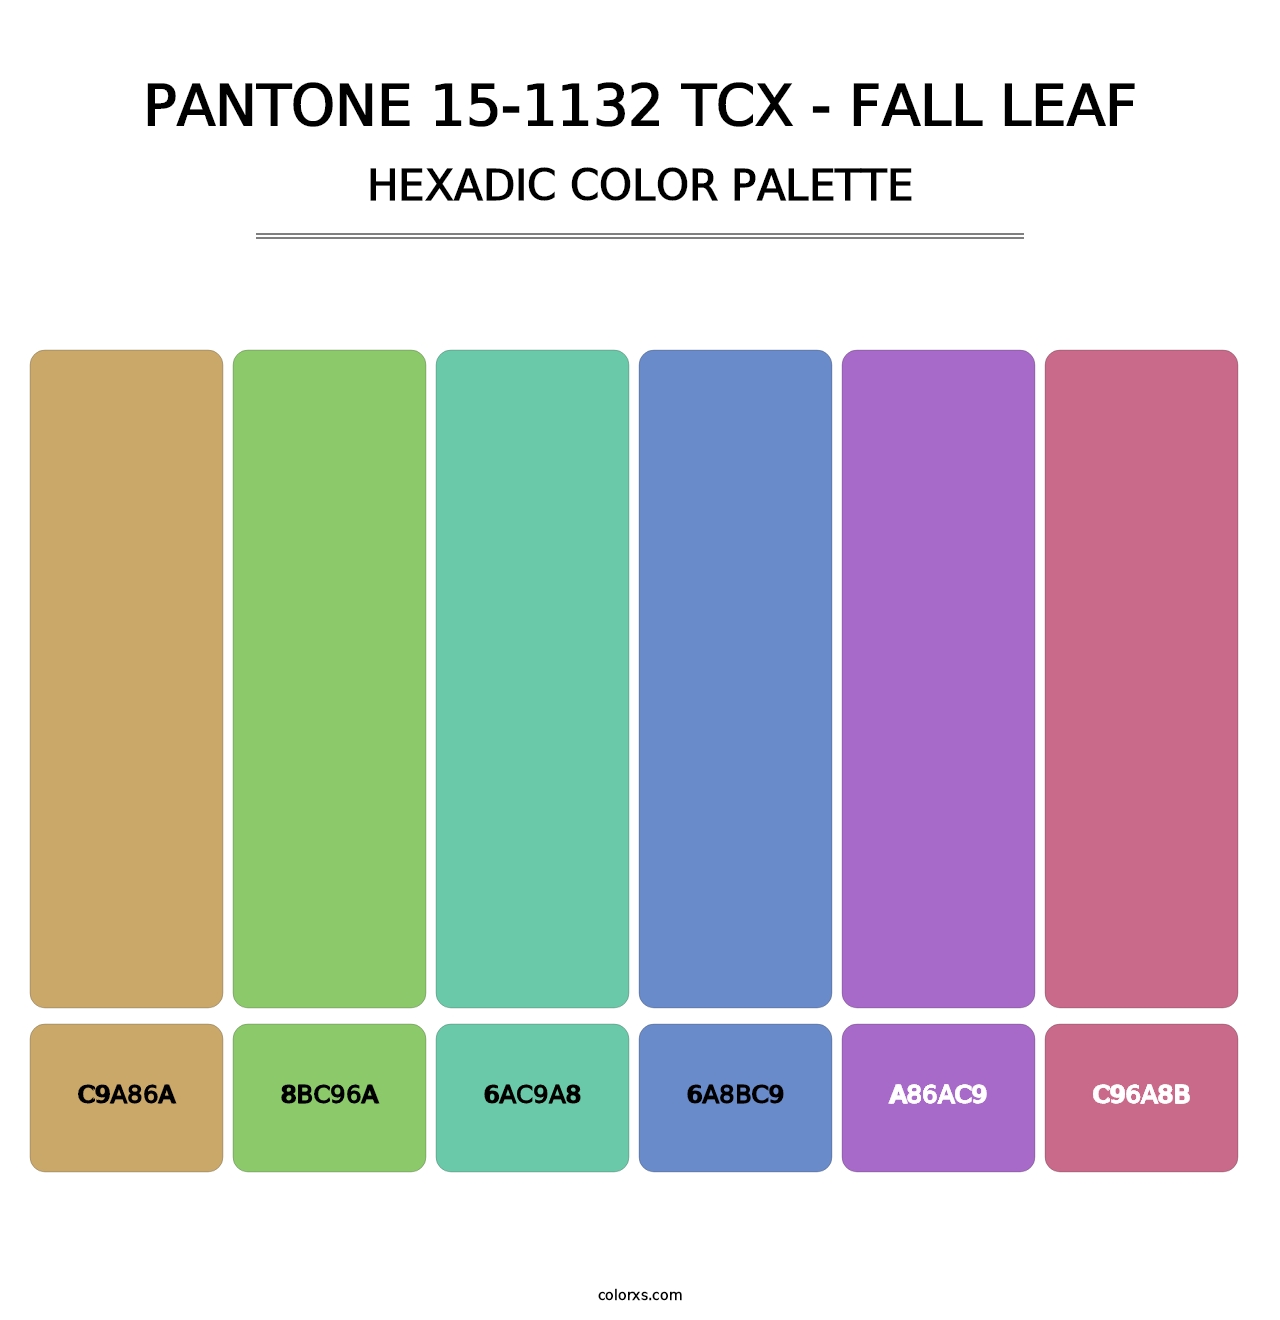 PANTONE 15-1132 TCX - Fall Leaf - Hexadic Color Palette